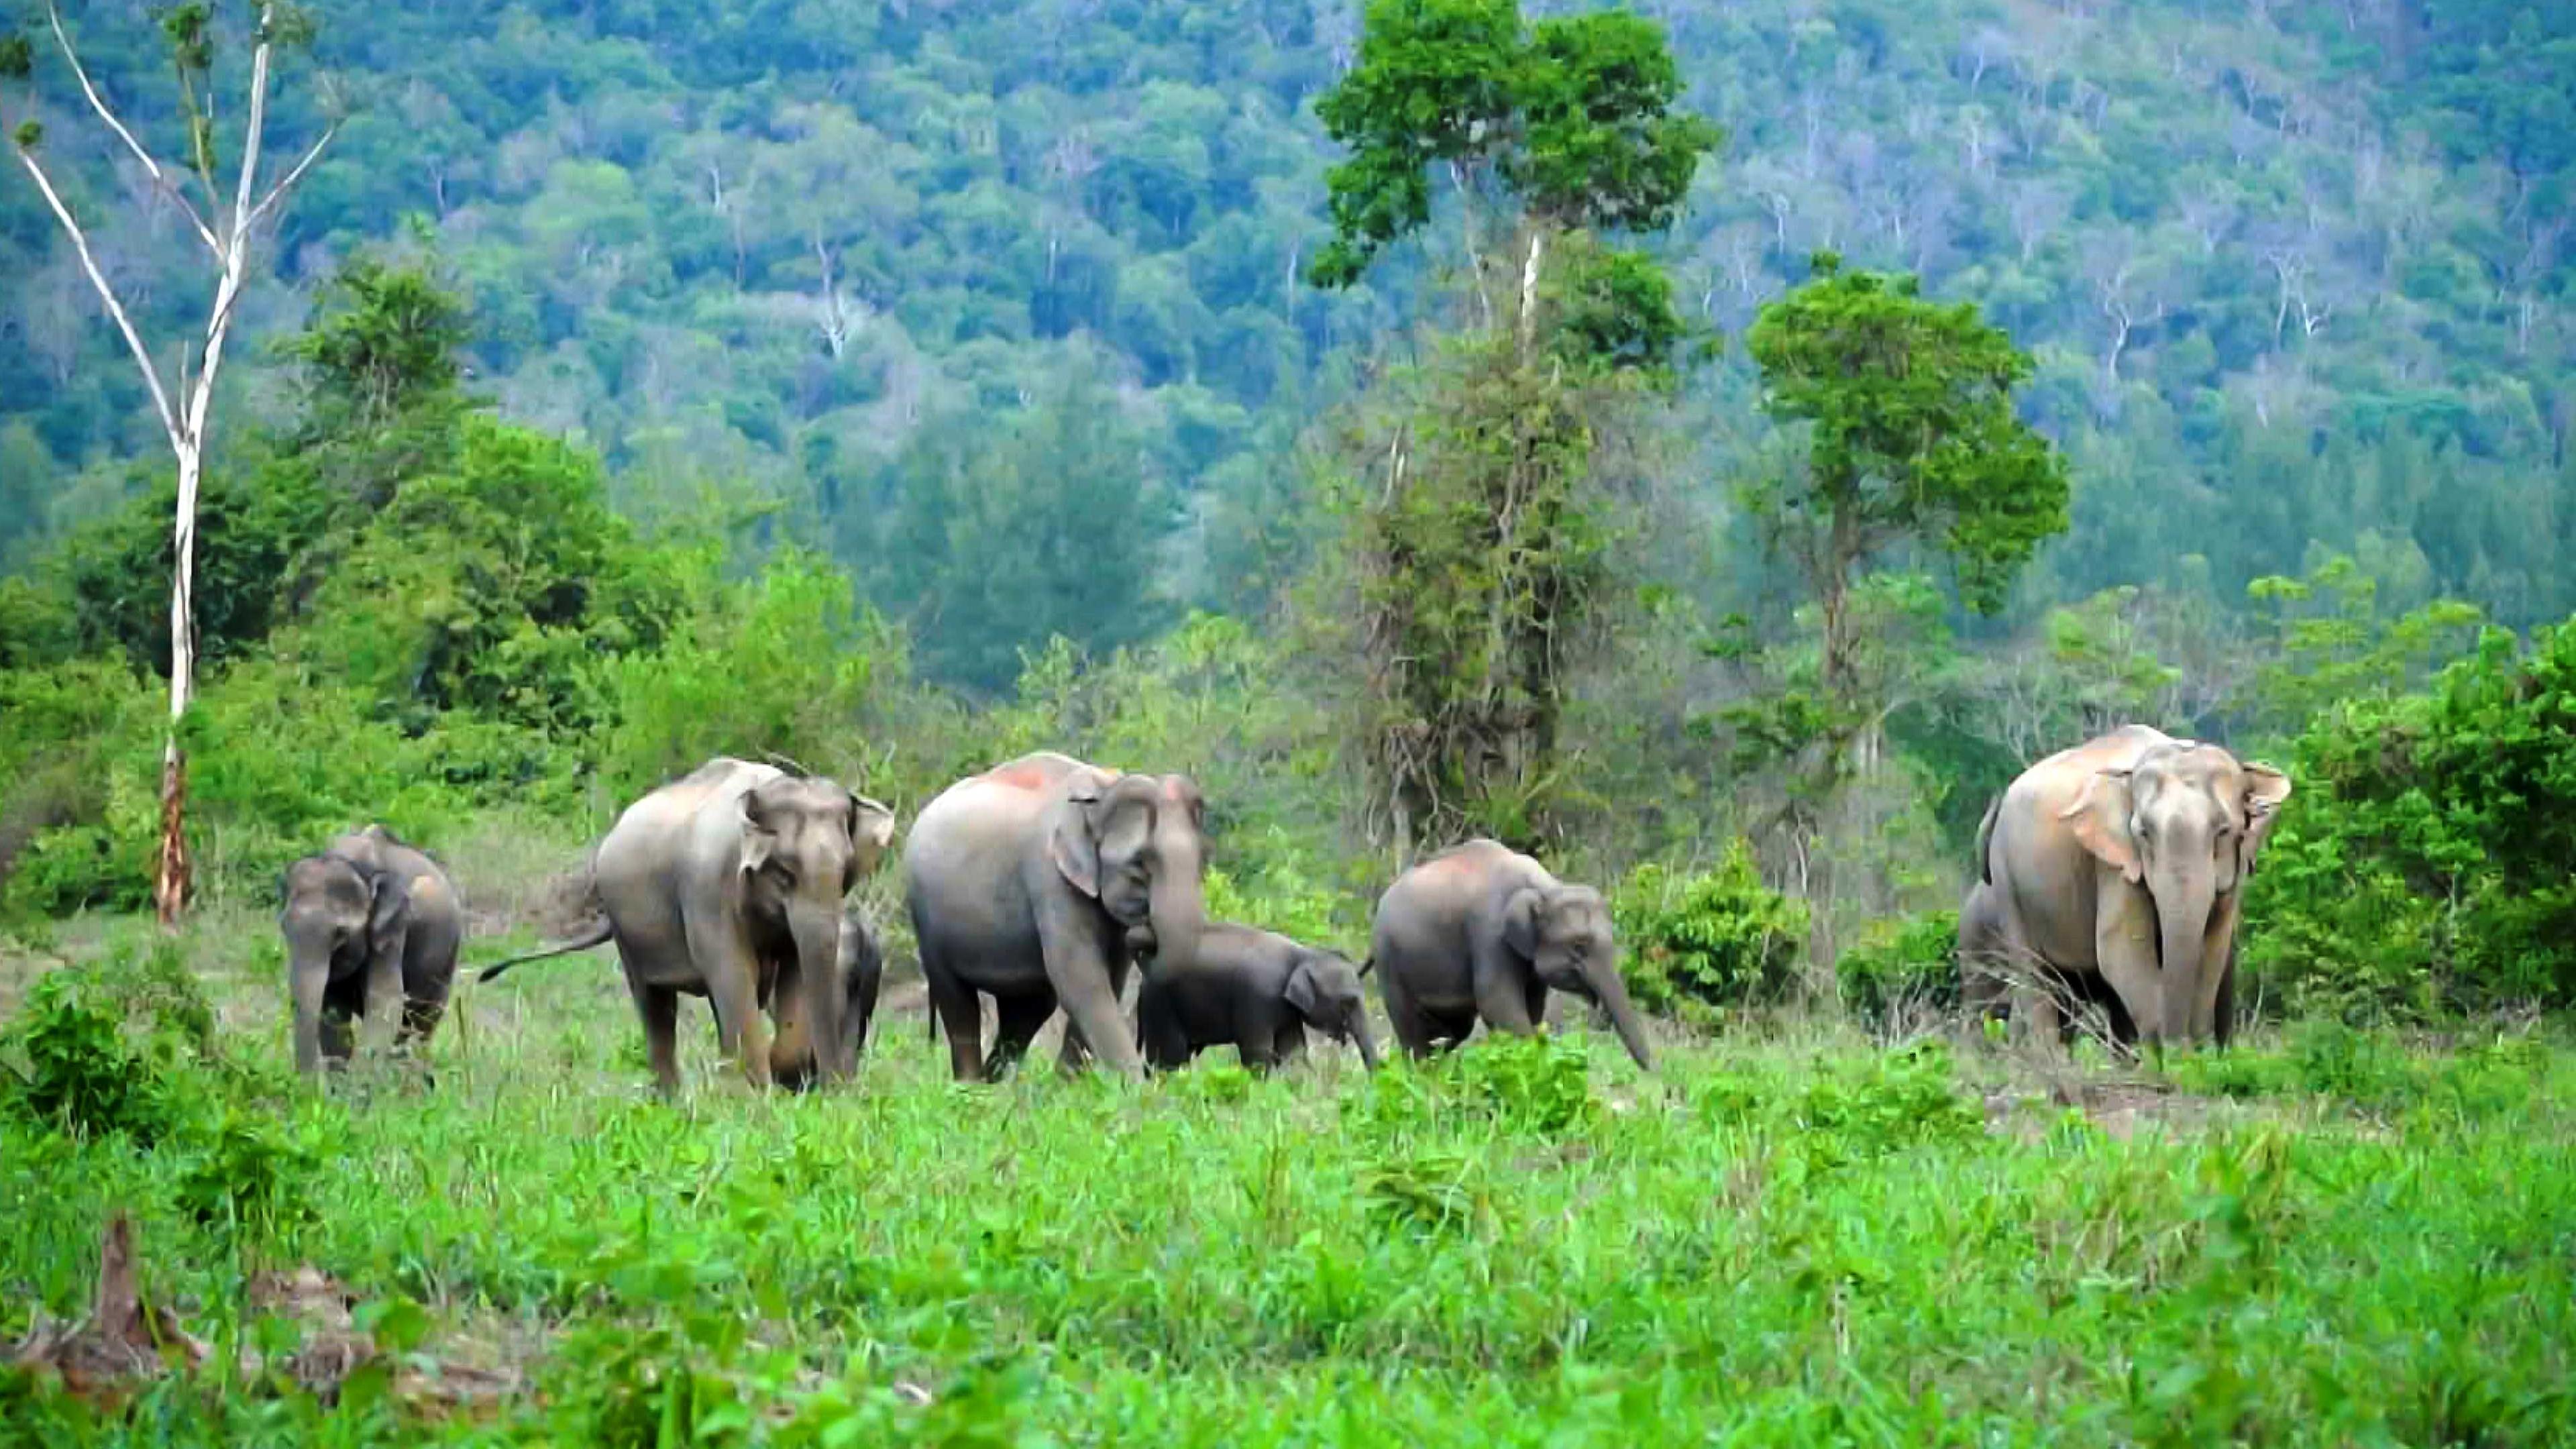  Elefantenherde in grüner Landschaft.